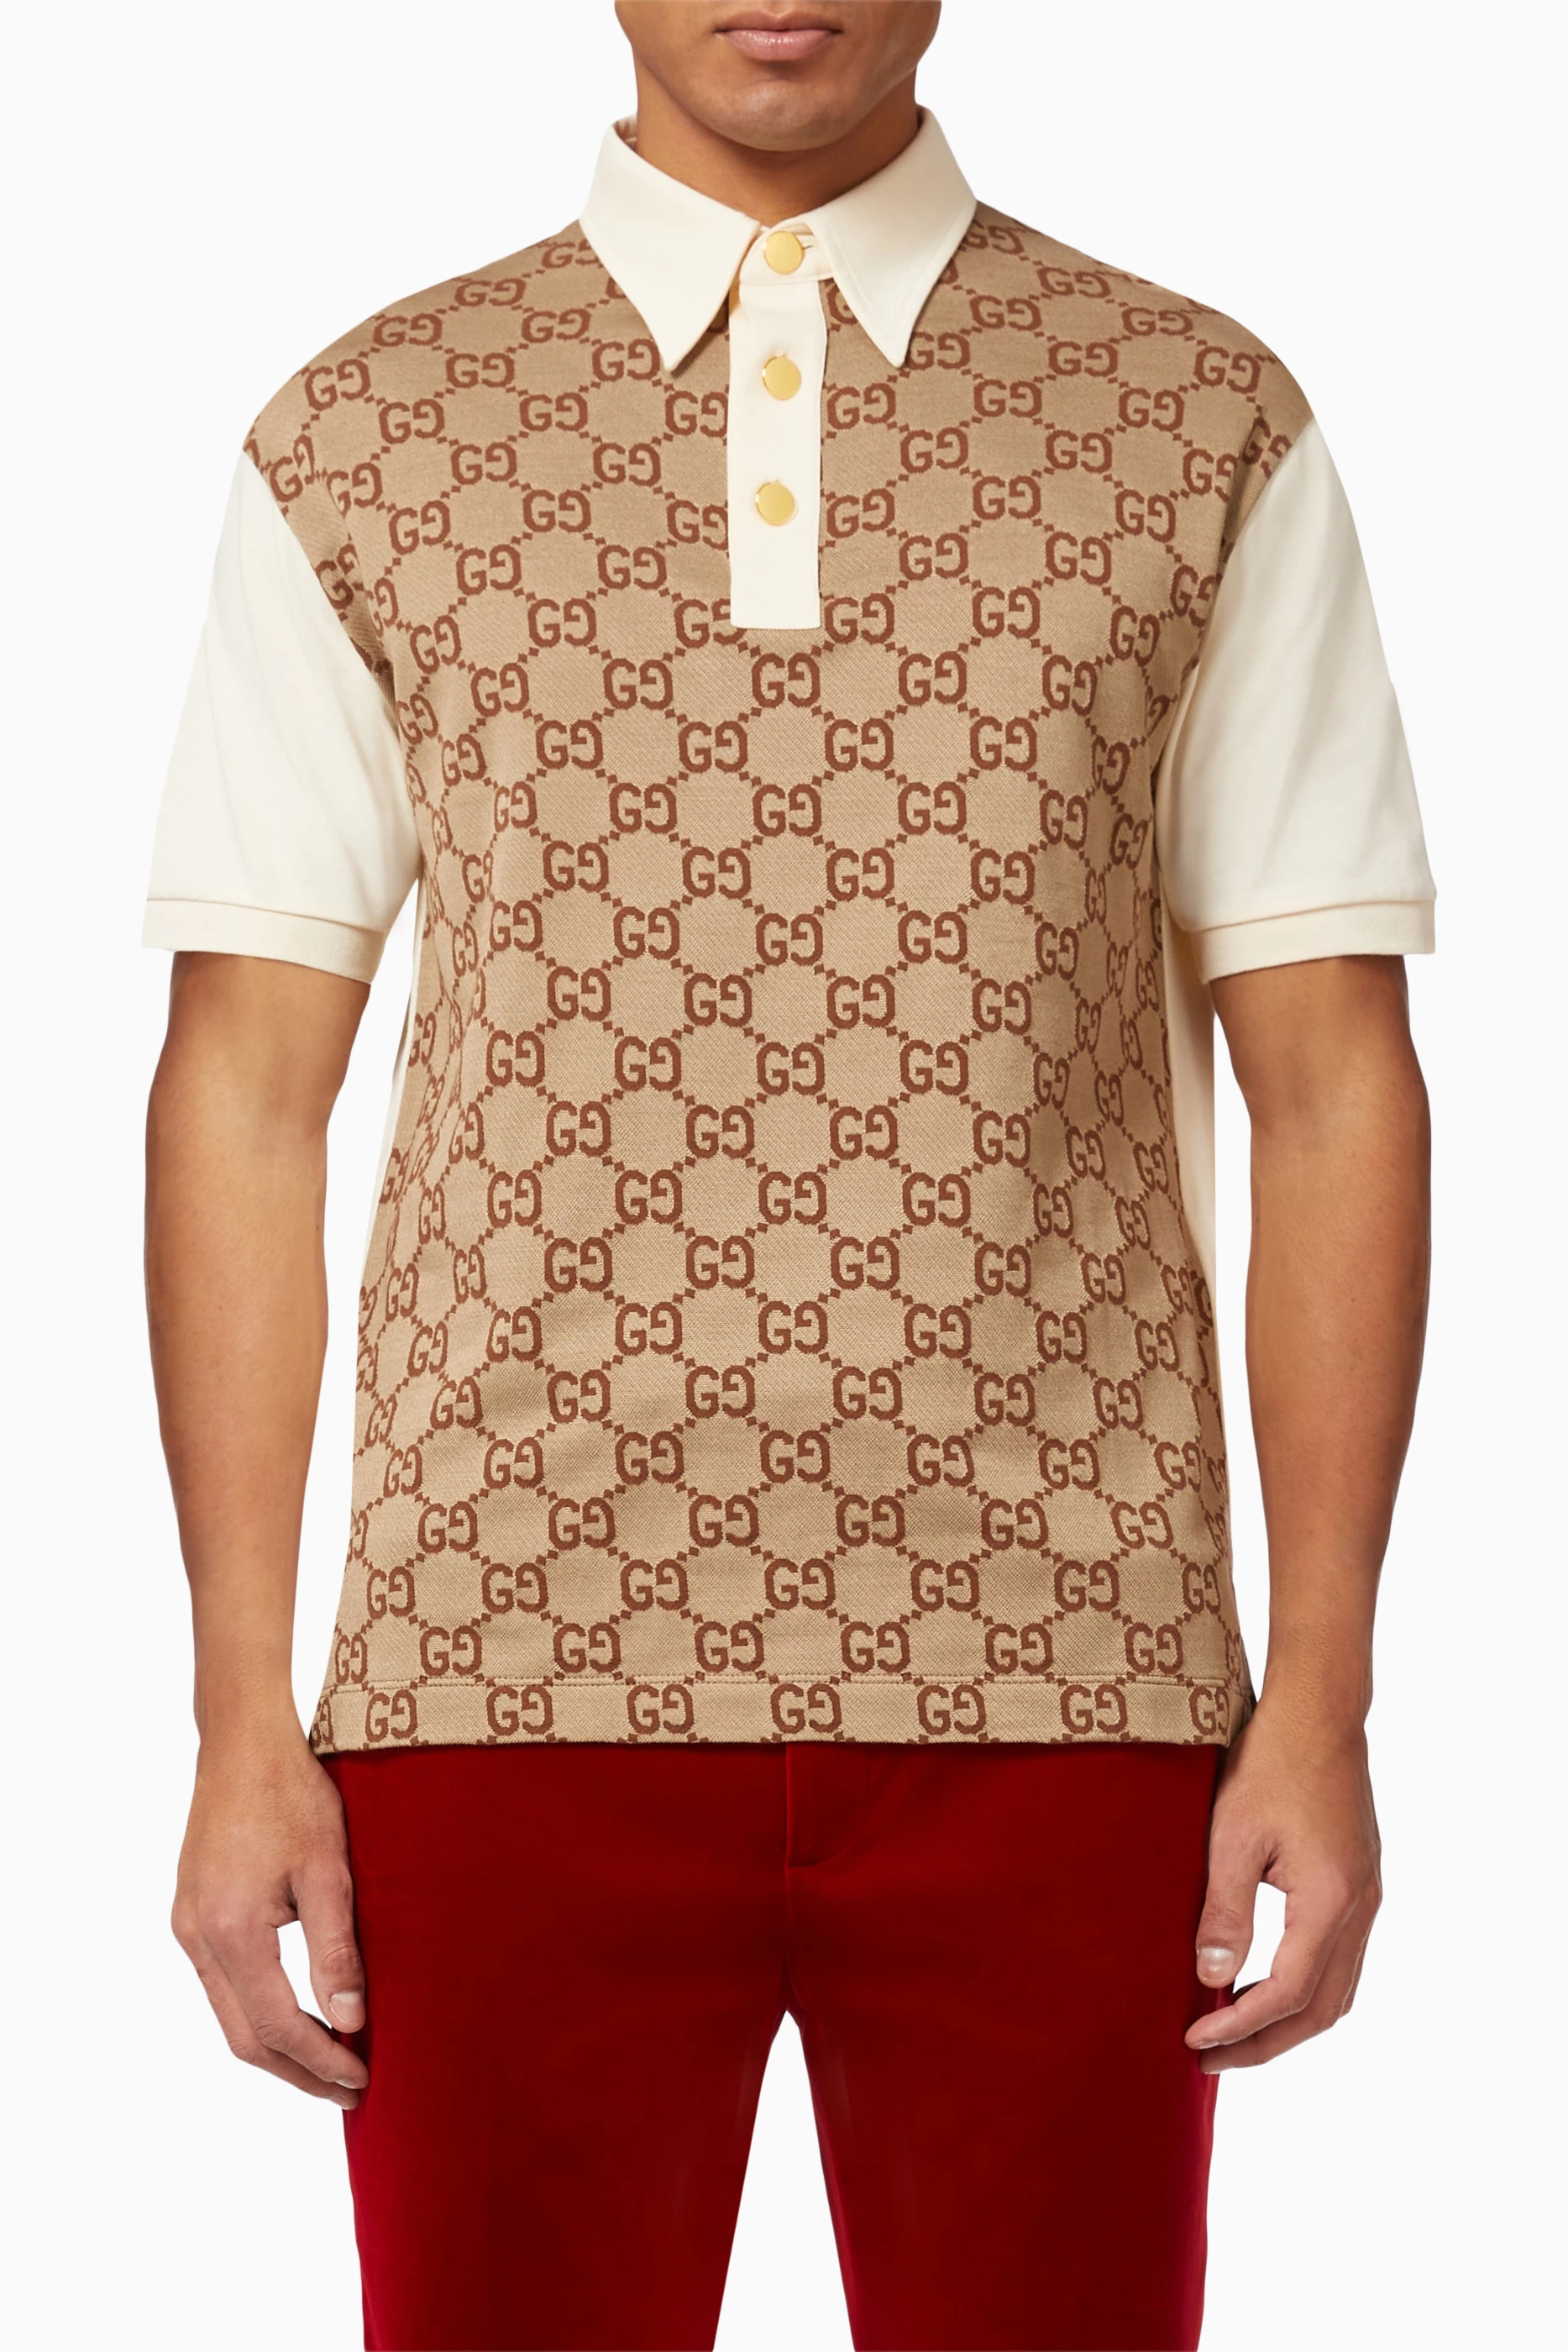 Shop Gucci Neutral Polo Shirt in GG Jacquard Jersey for MEN | Ounass Oman